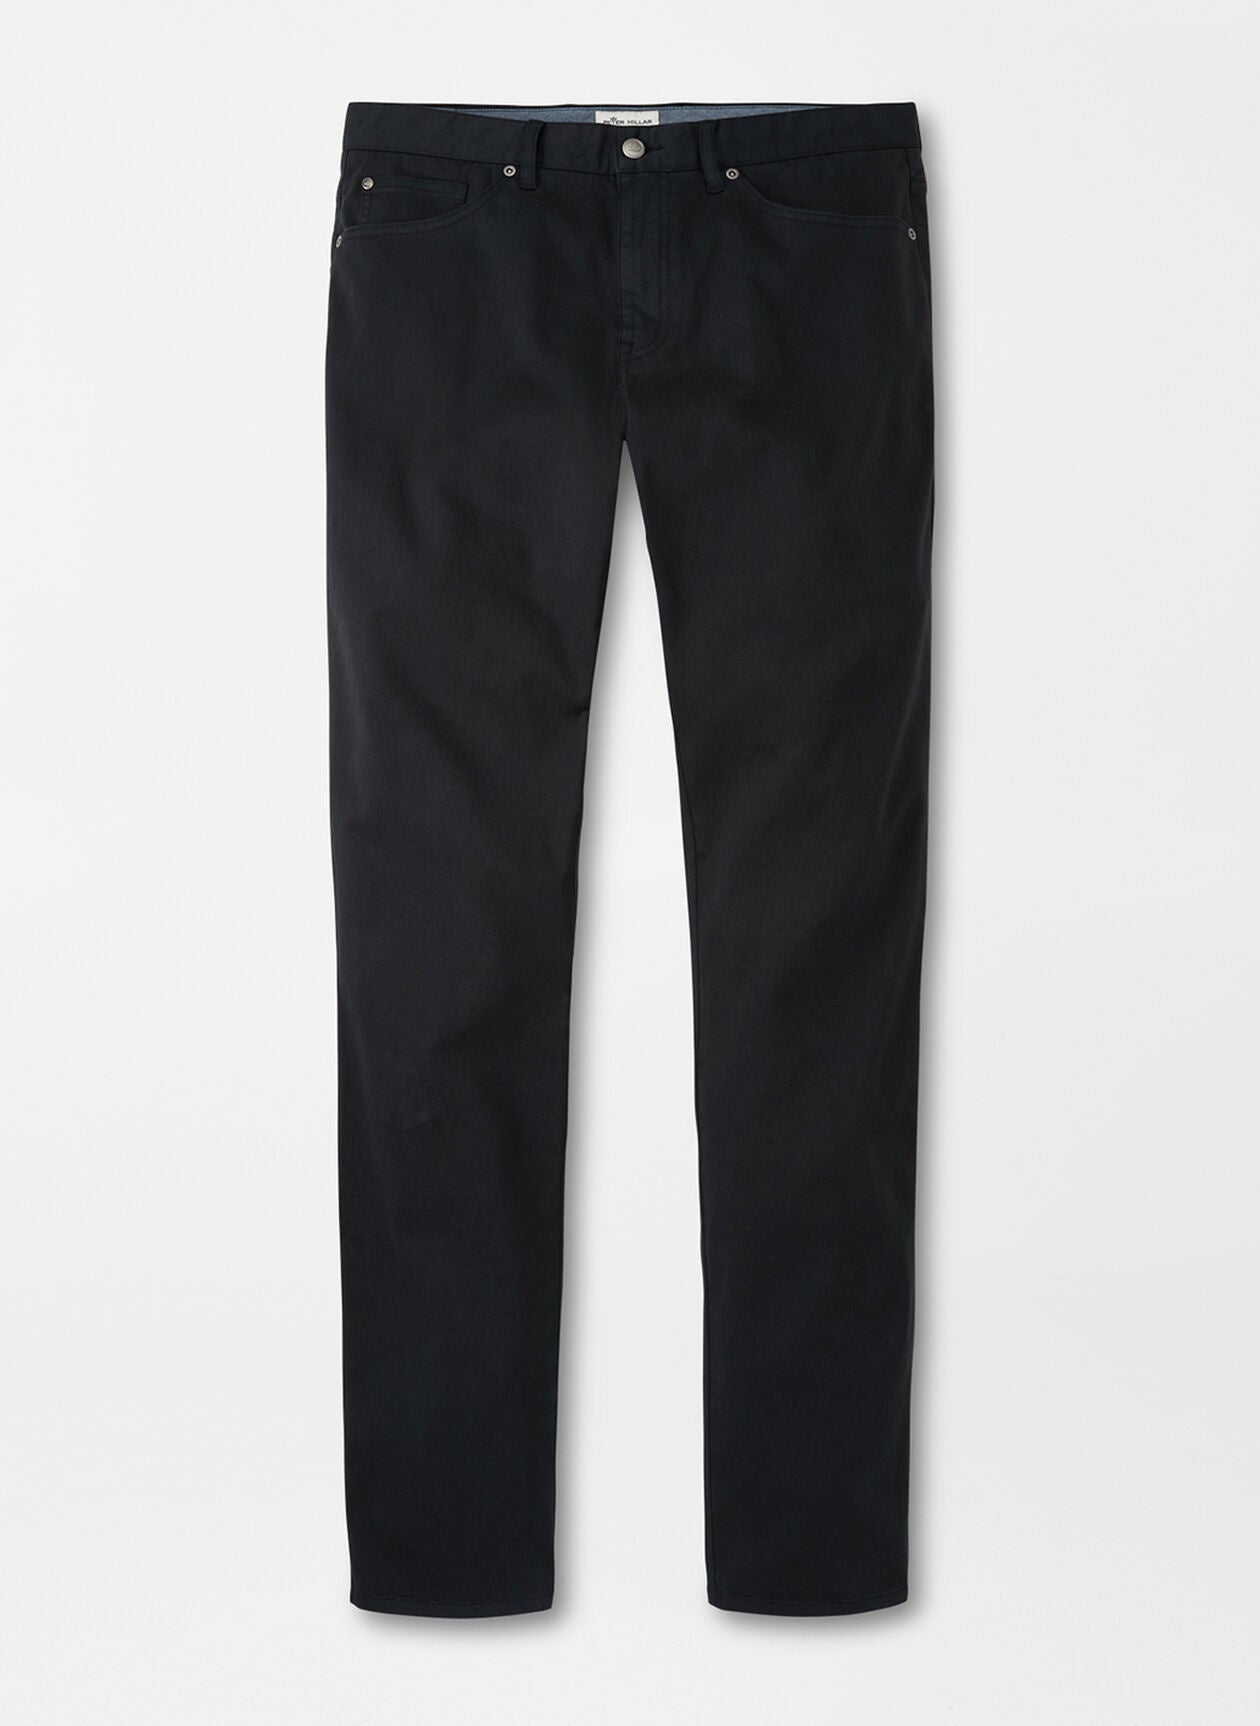 Peter Millar Ultimate Sateen Five-Pocket Pant in Black